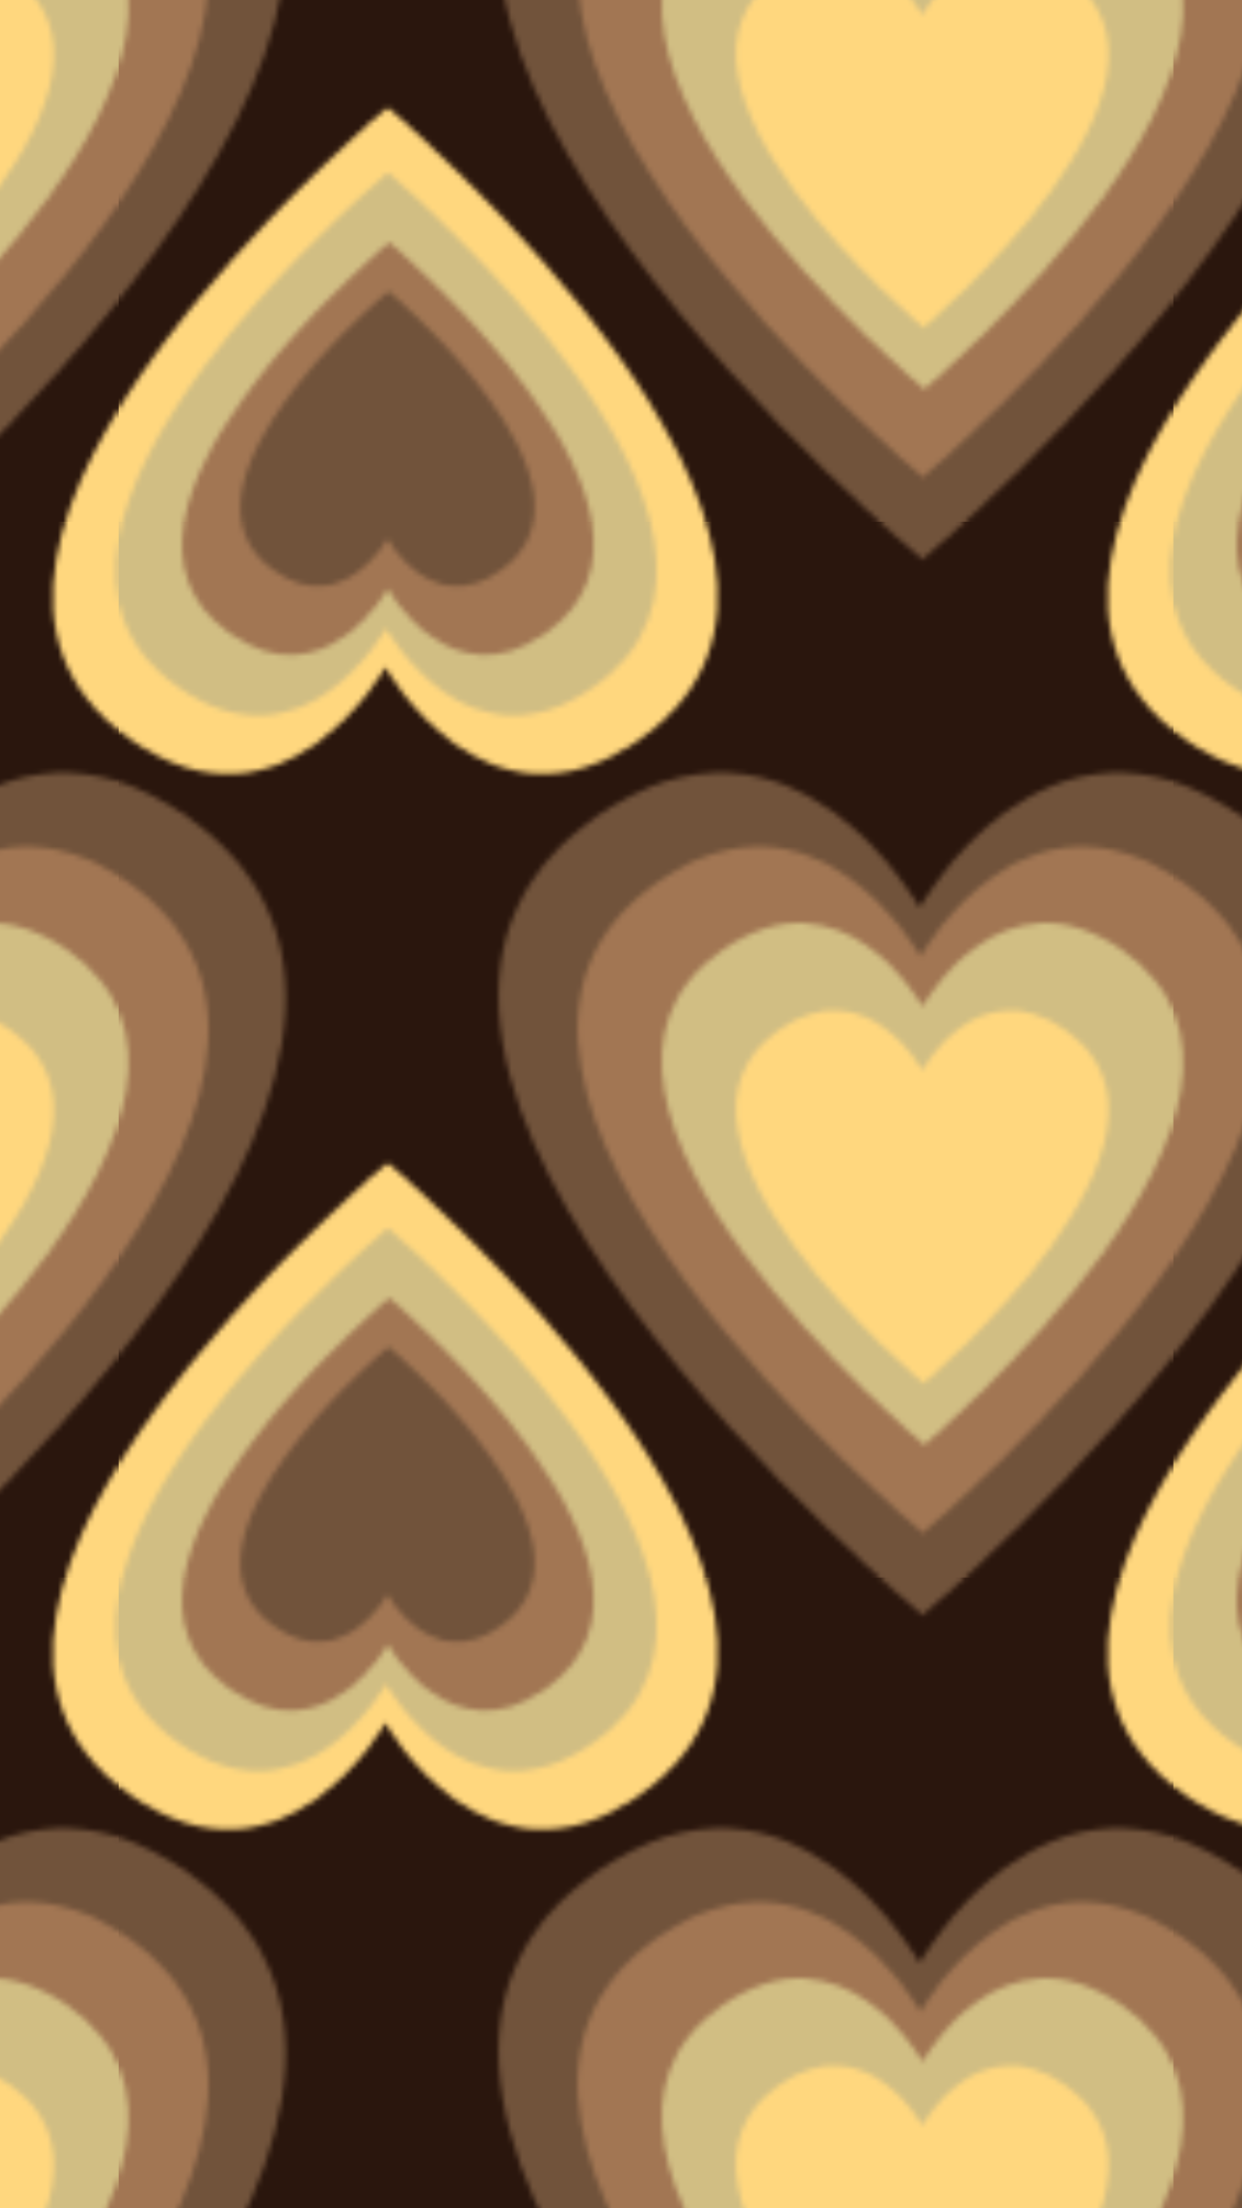 Chocolate hearts #valentinesday #inspirational #hearts #fractals #digitalart #ART. Heart wallpaper, Fractal art wallpaper, Heart wallpaper iphone